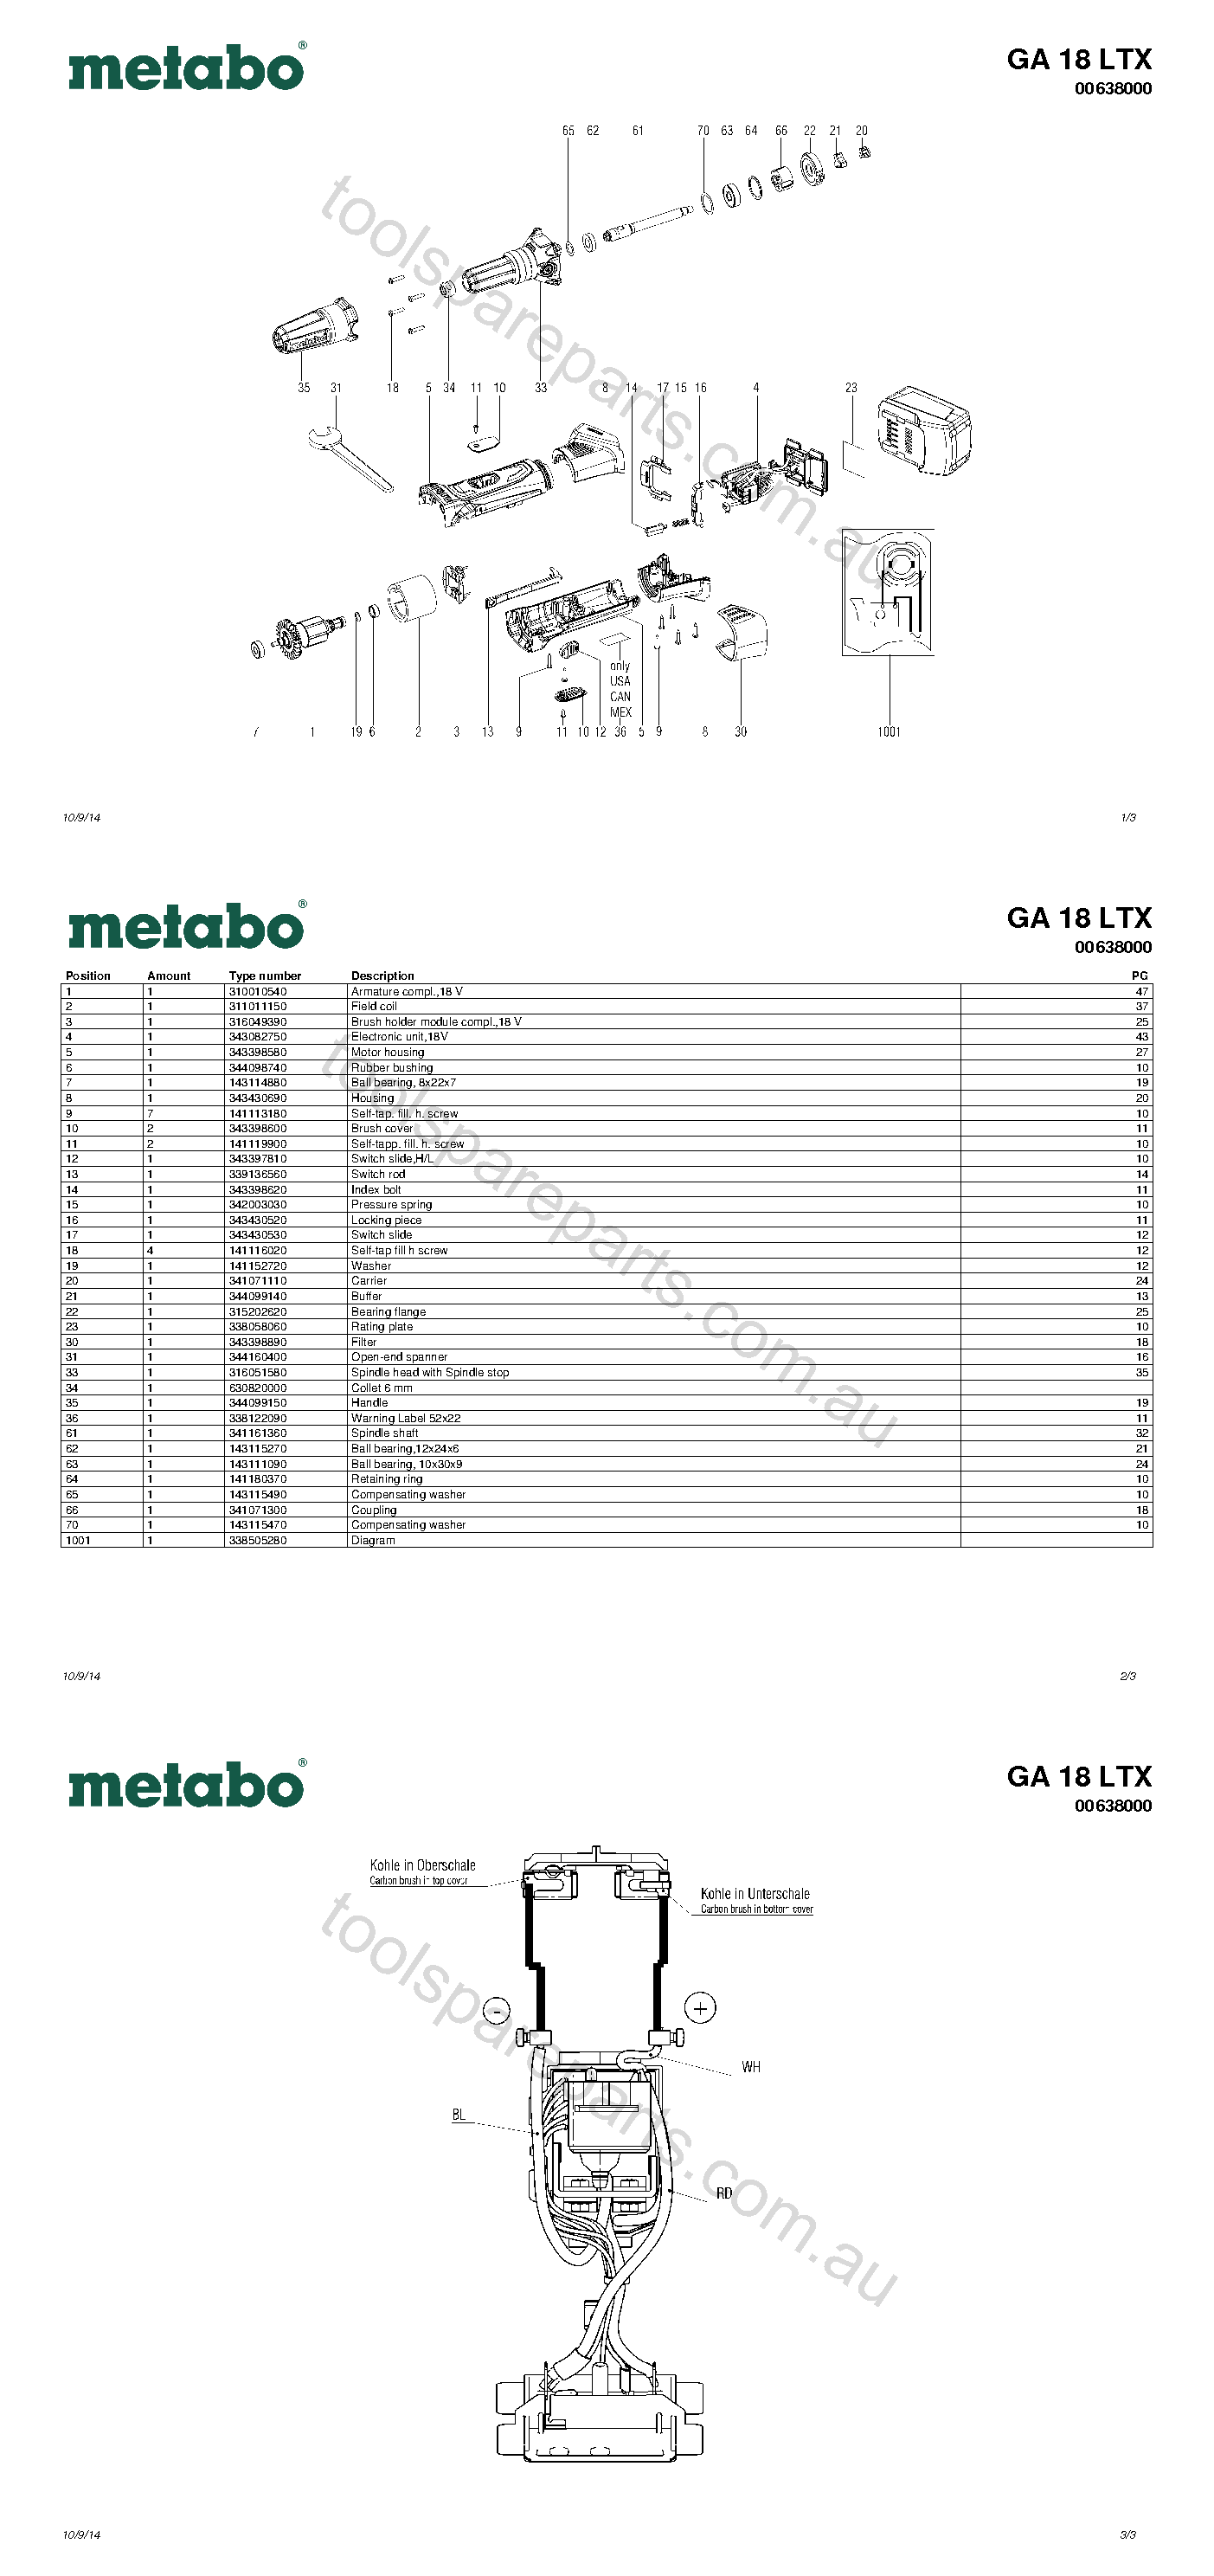 Metabo GA 18 LTX 00638000  Diagram 1